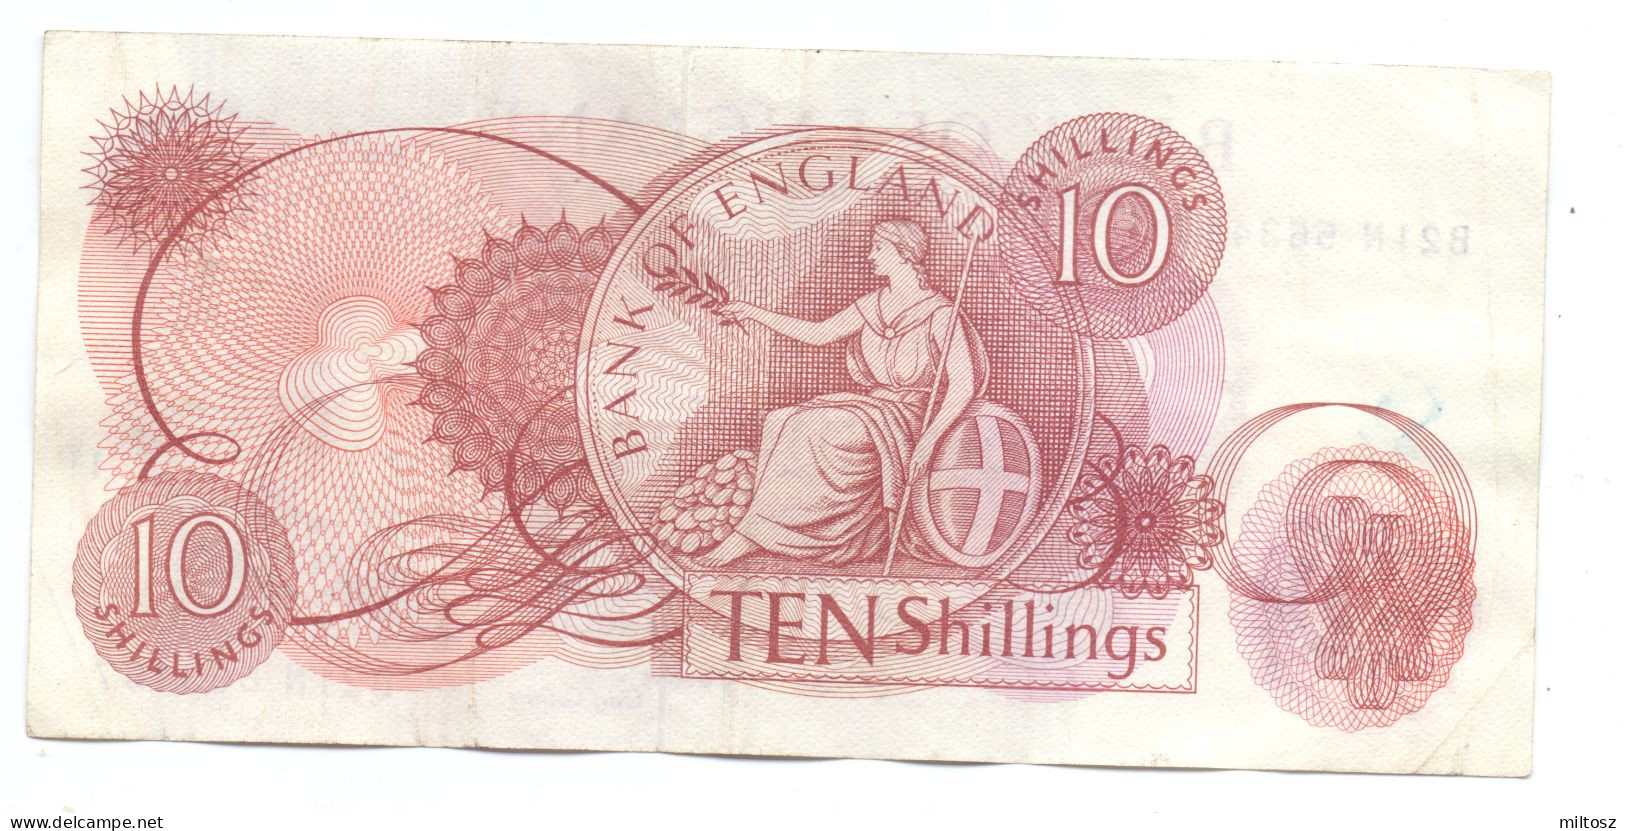 Great Britain 10 Shillings (J.S. Fjorde) - 10 Shillings